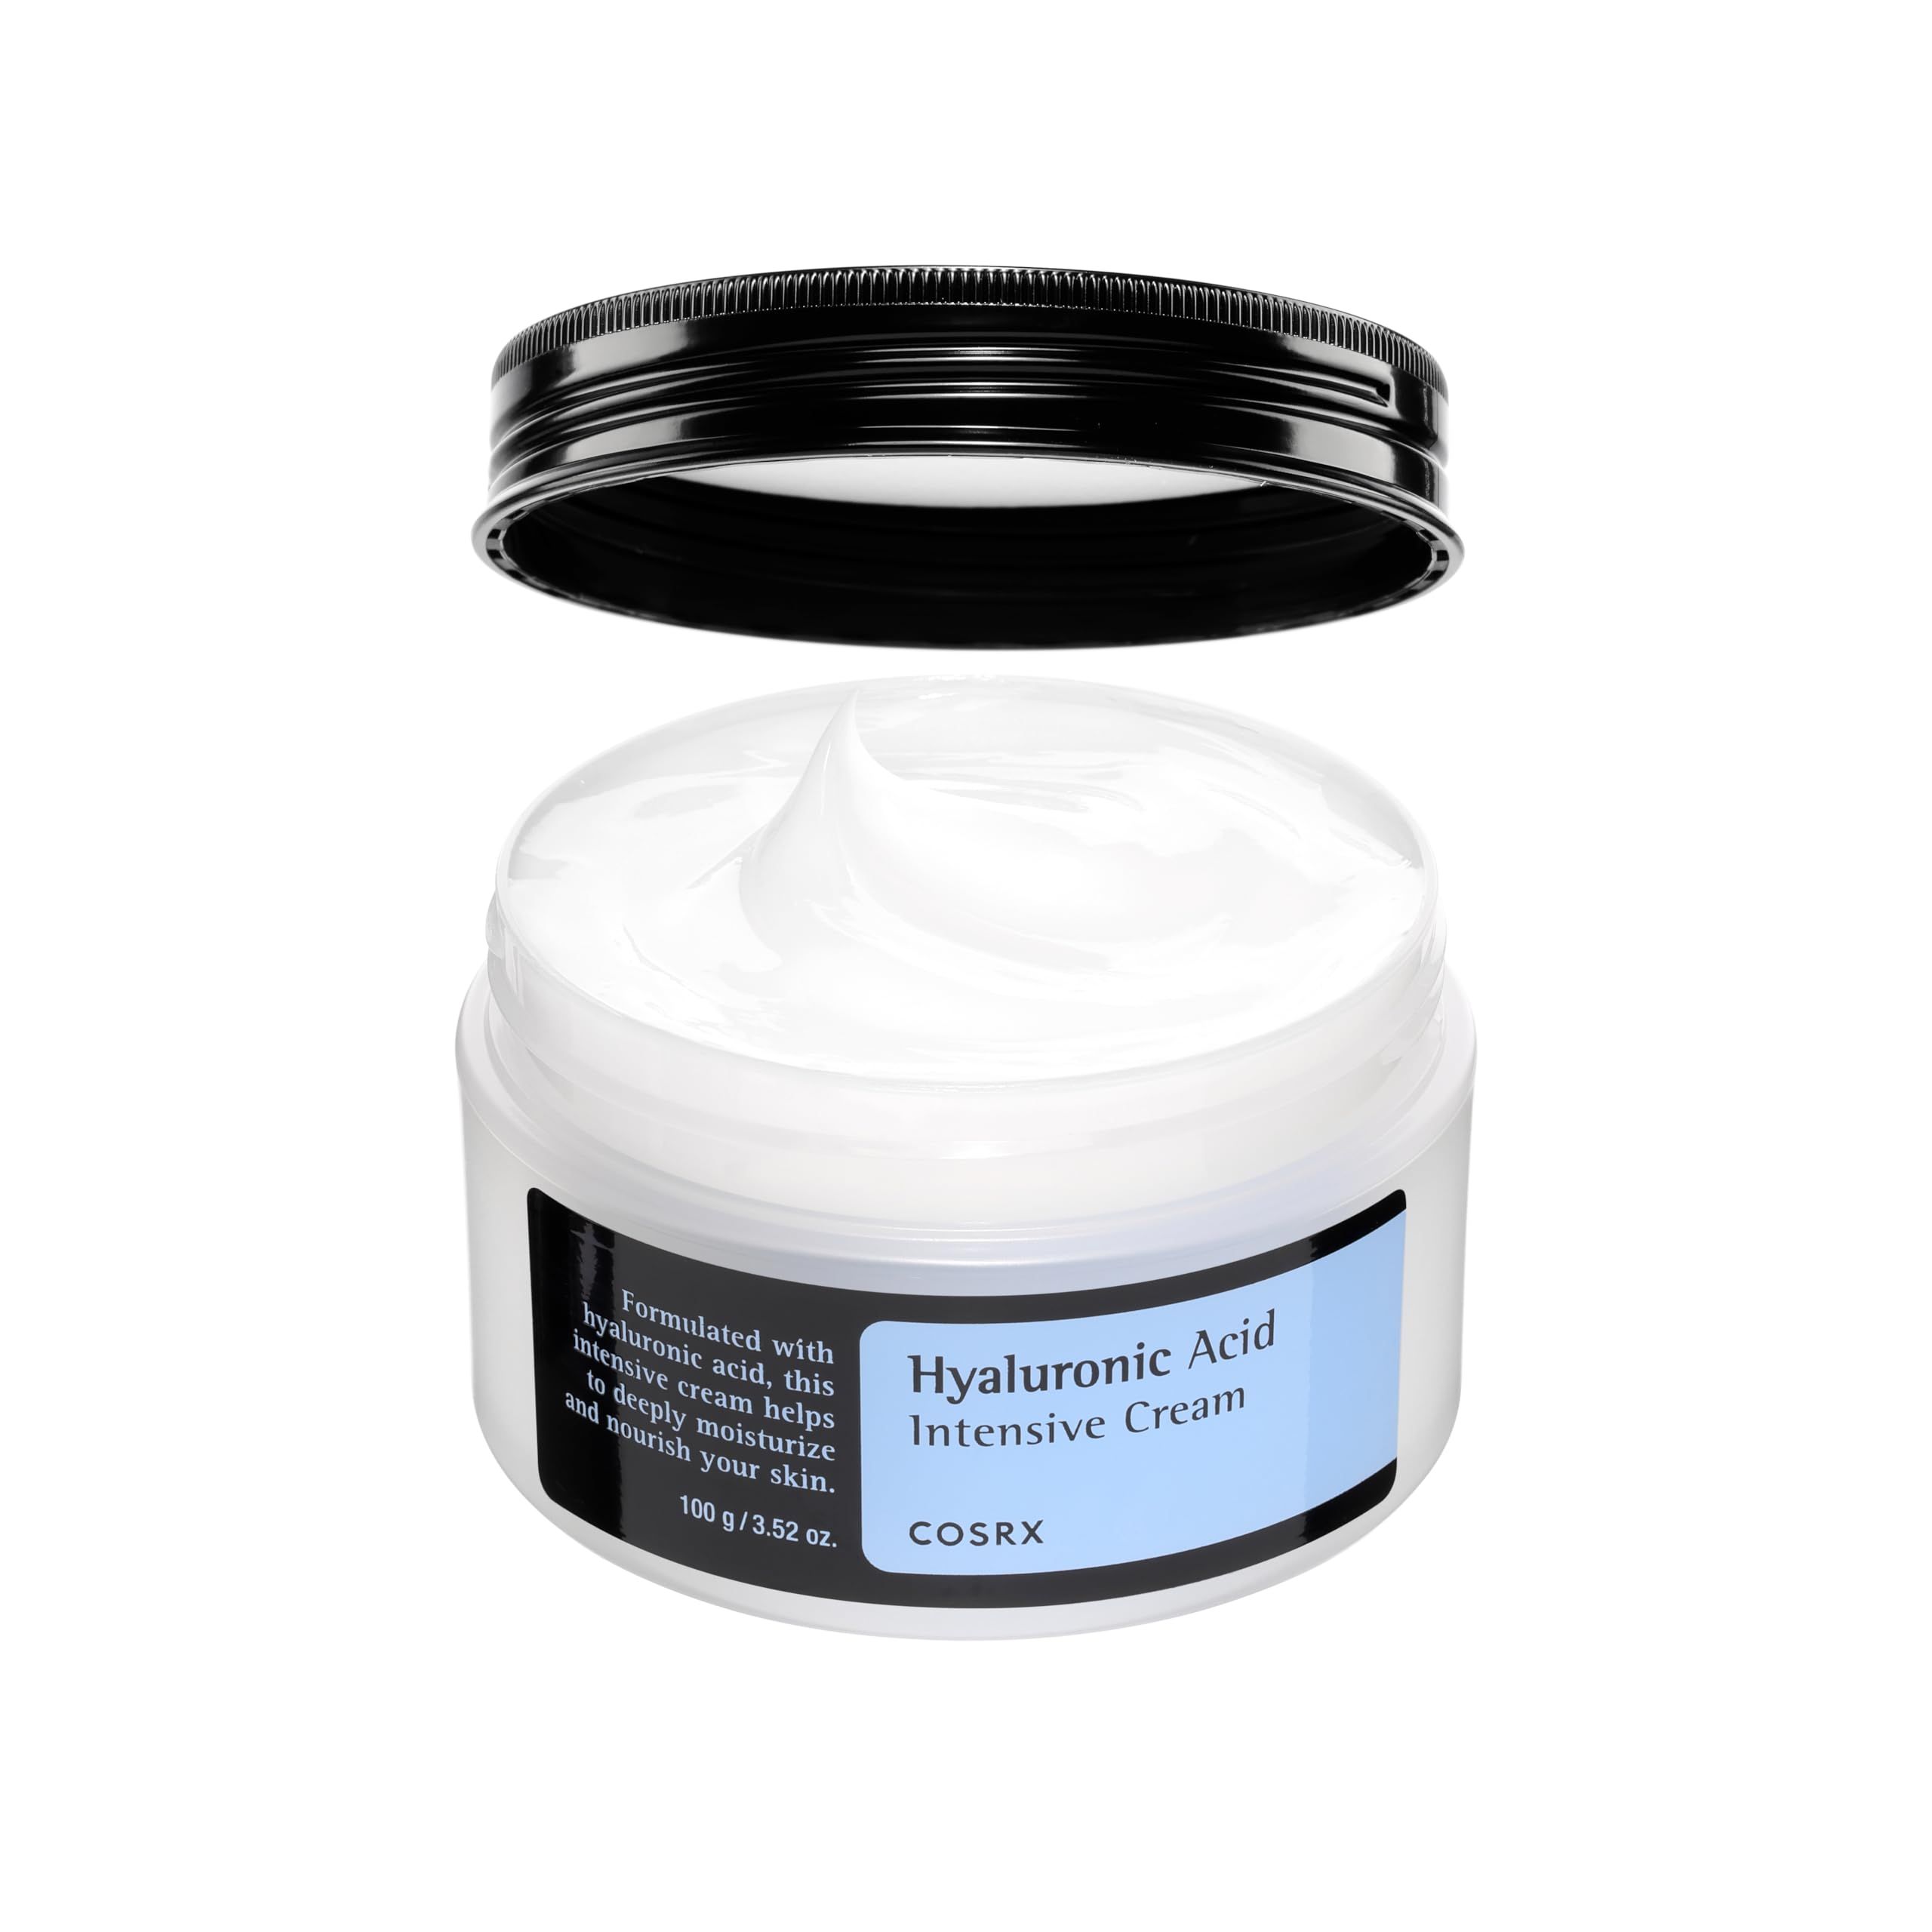 COSRX Hyaluronic Acid Intensive Cream, 3.53 oz / 100g | Wrinkle Cream | Korean Skin Care, Animal ... | Amazon (US)